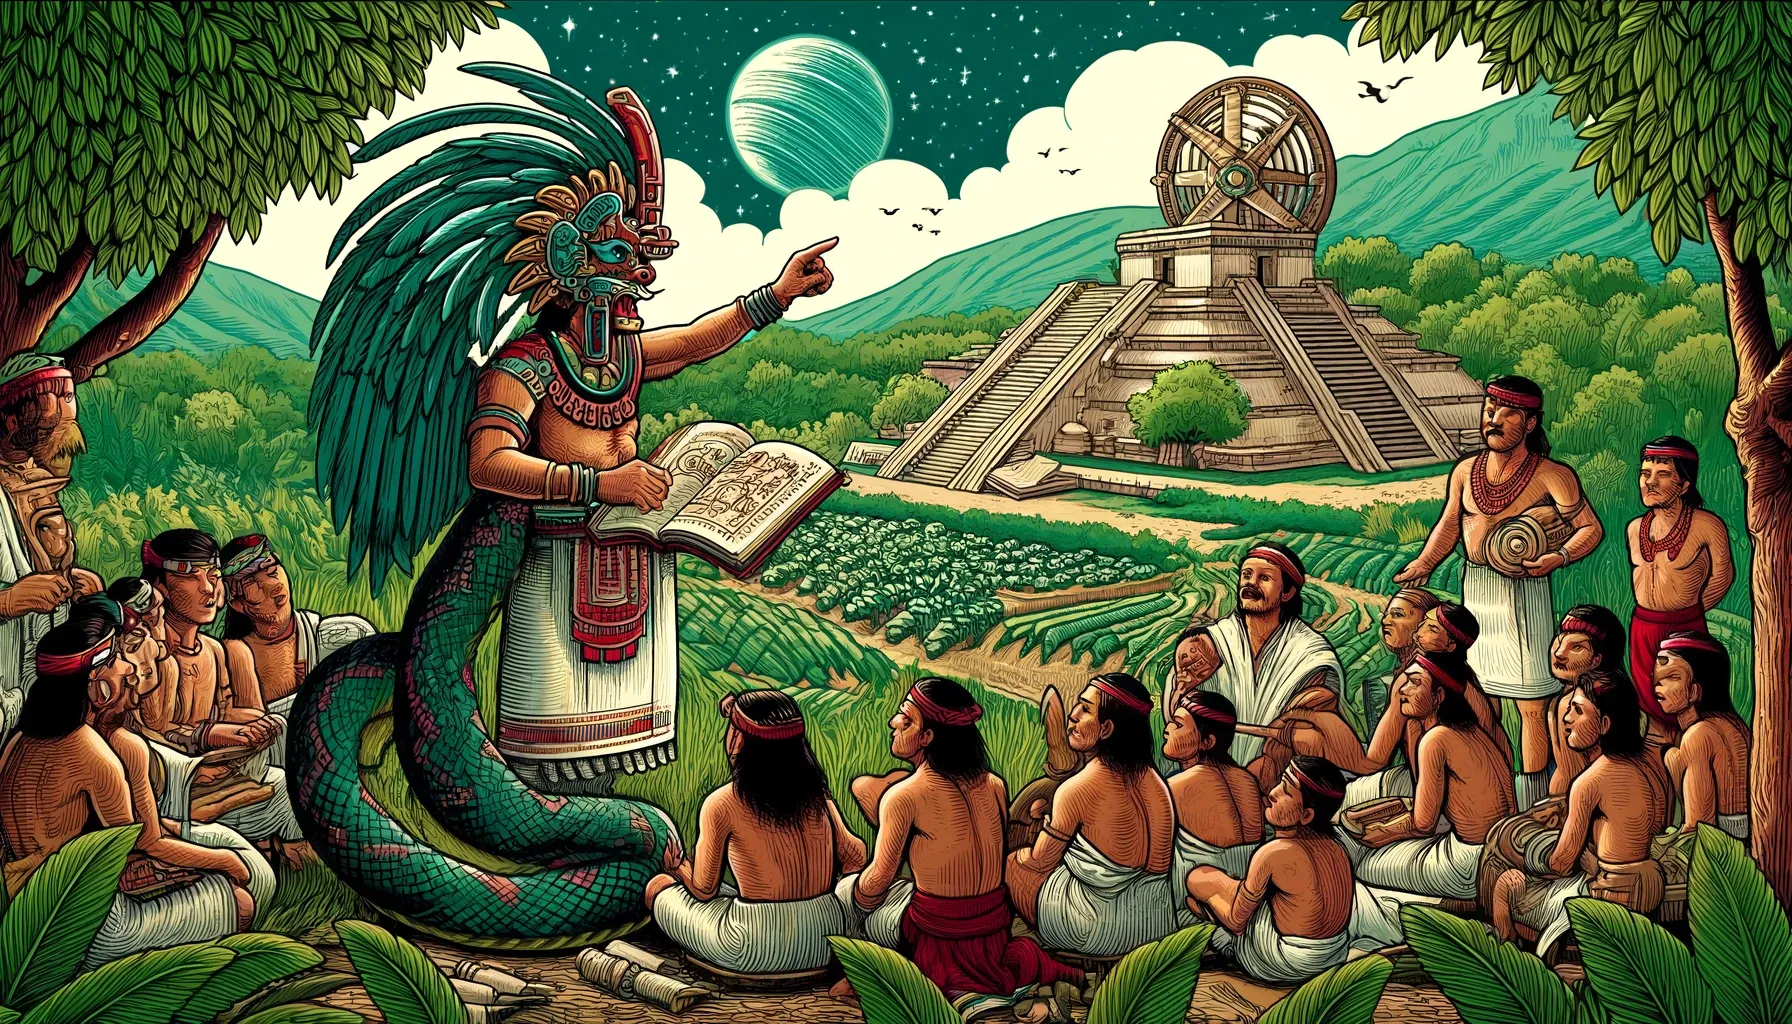  Ilustración de Quetzalcóatl en forma humana enseñando agricultura y astronomía a un grupo de aztecas en un entorno tradicional.